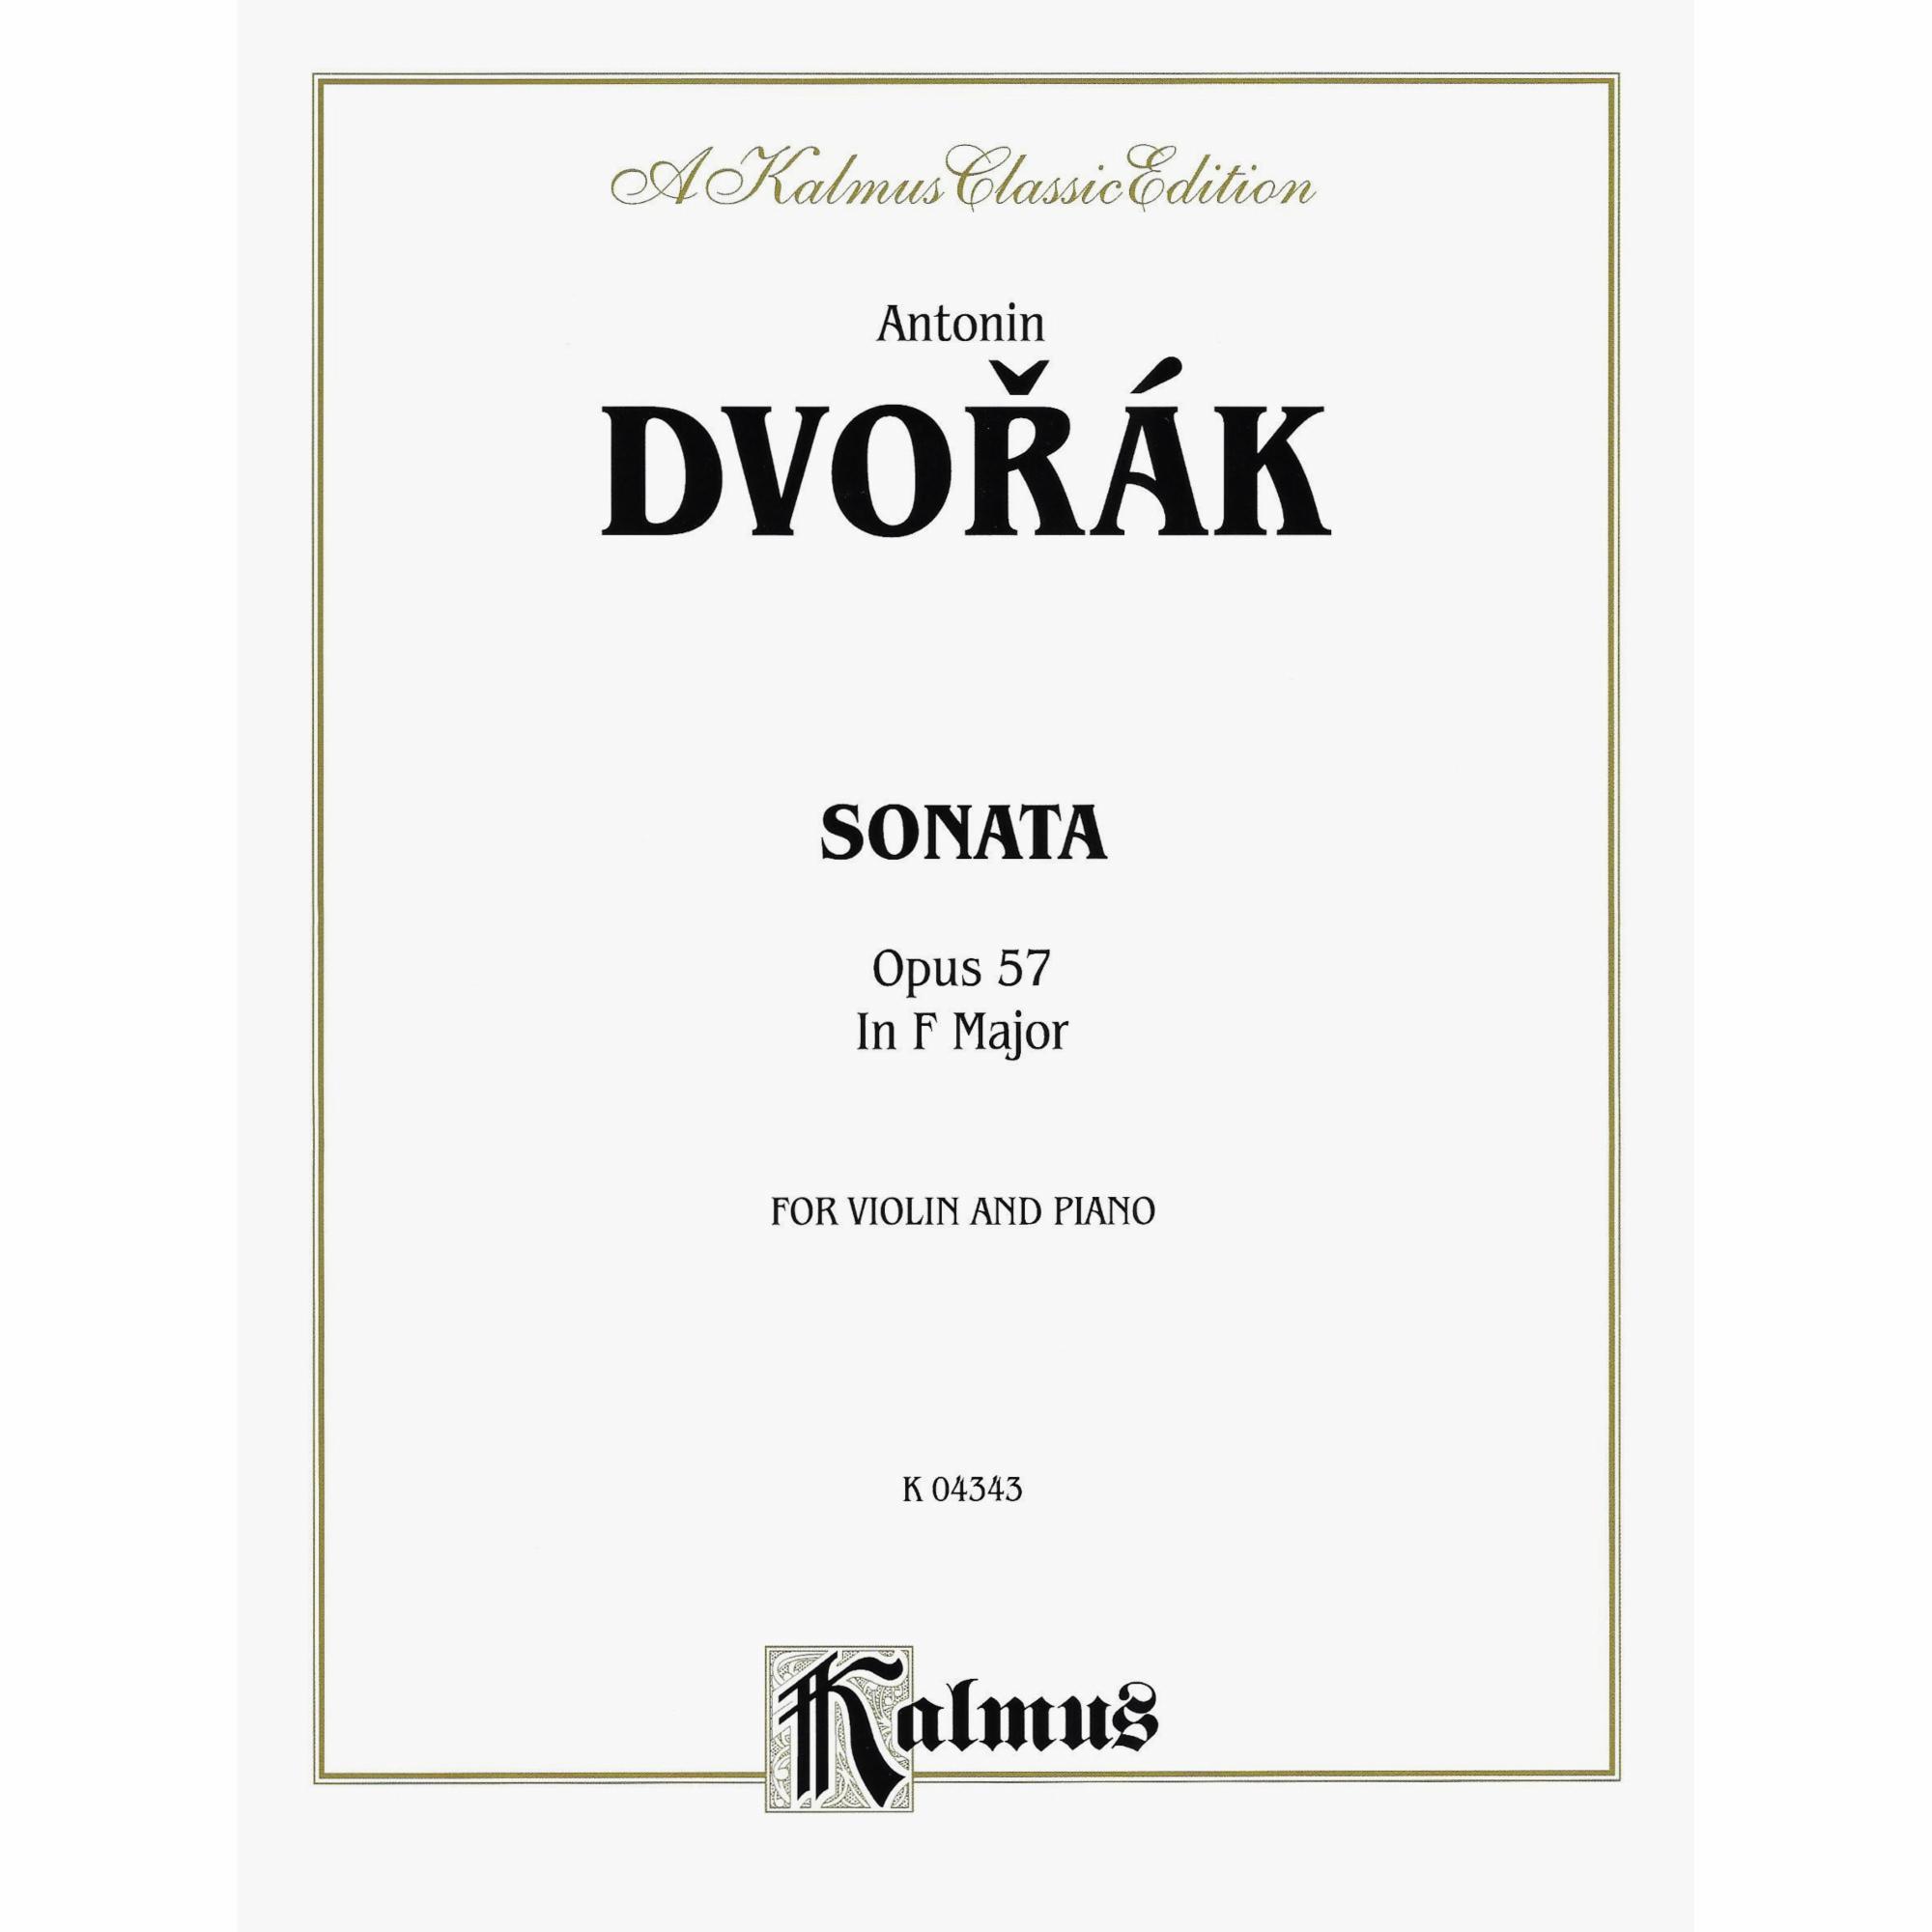 Dvorak -- Sonata in F Major, Op. 57 for Violin and Piano